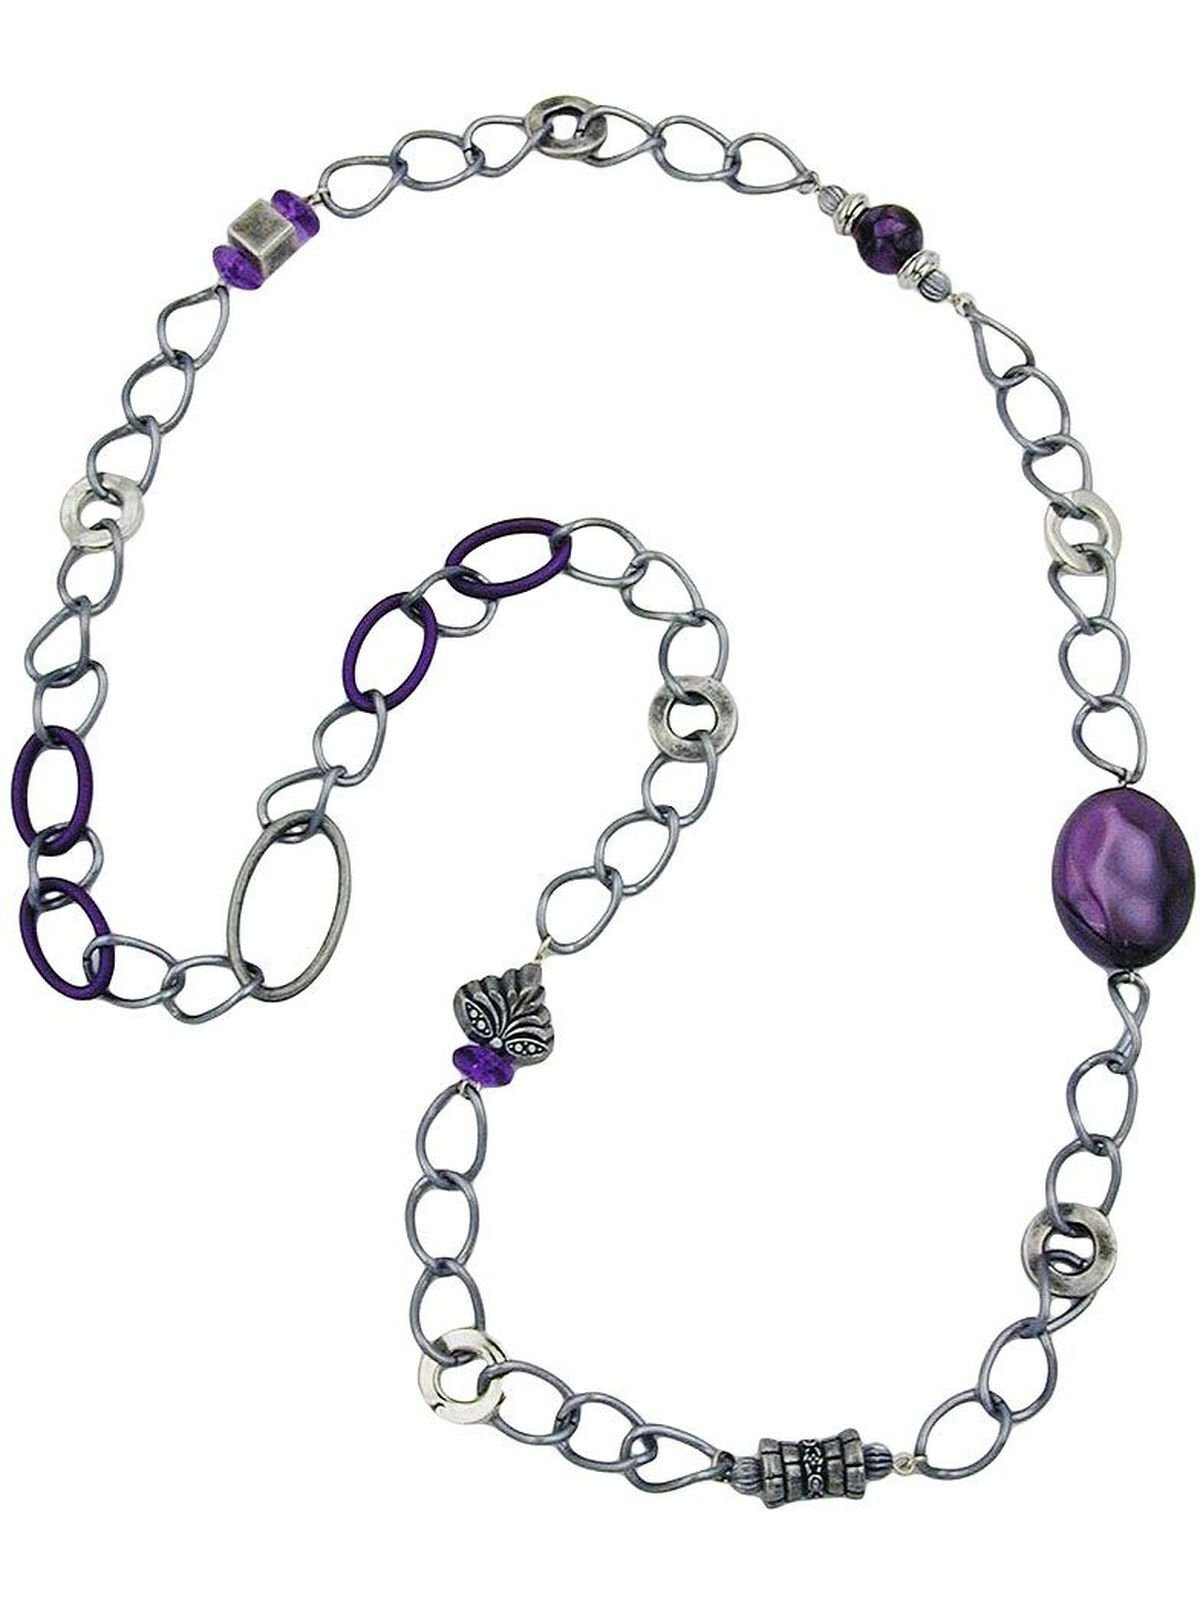 Gallay Perlenkette Kunststoffperlen lila-altsilberfarbene Weitpanzerkette Aluminium 95cm dunkelgrau